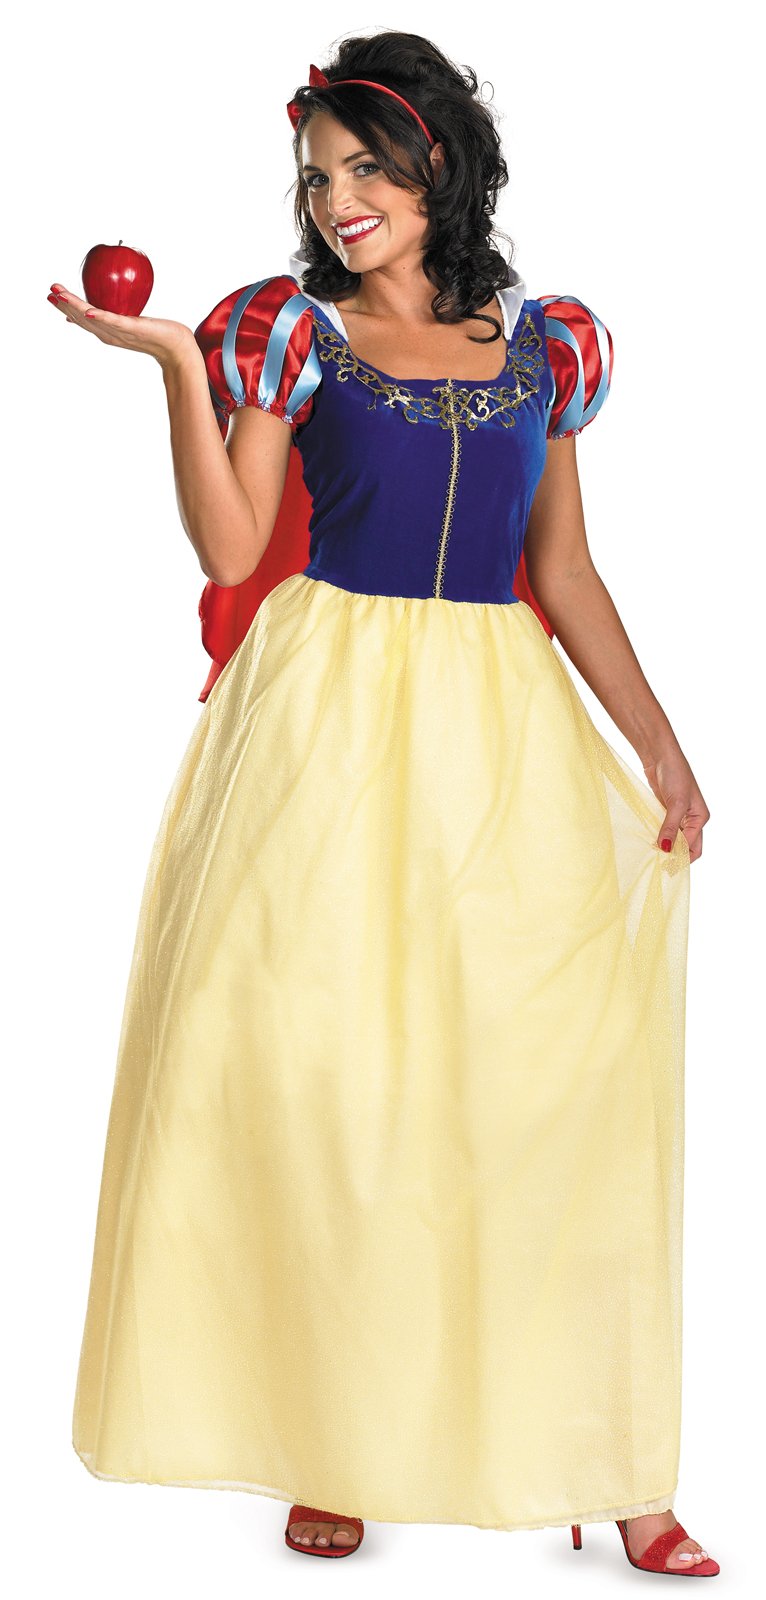 Snow White Deluxe Adult Plus Costume